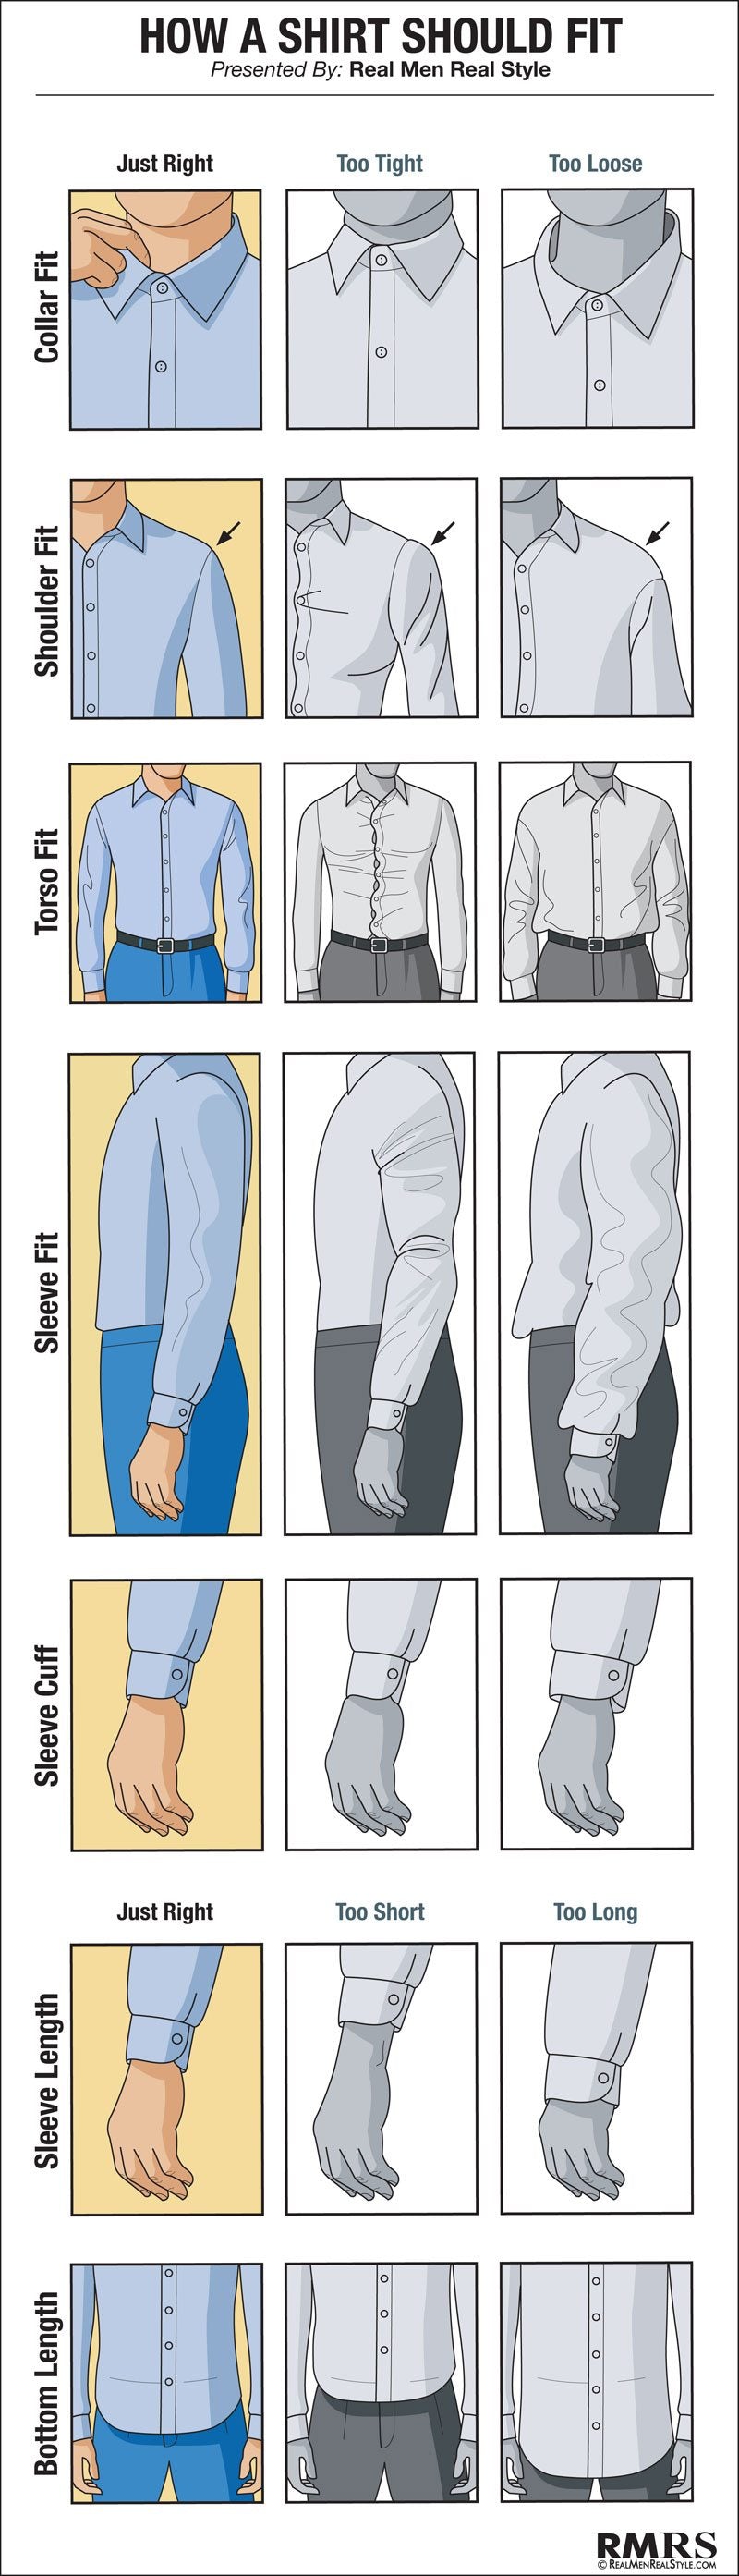 How men's dress shirts should fit 